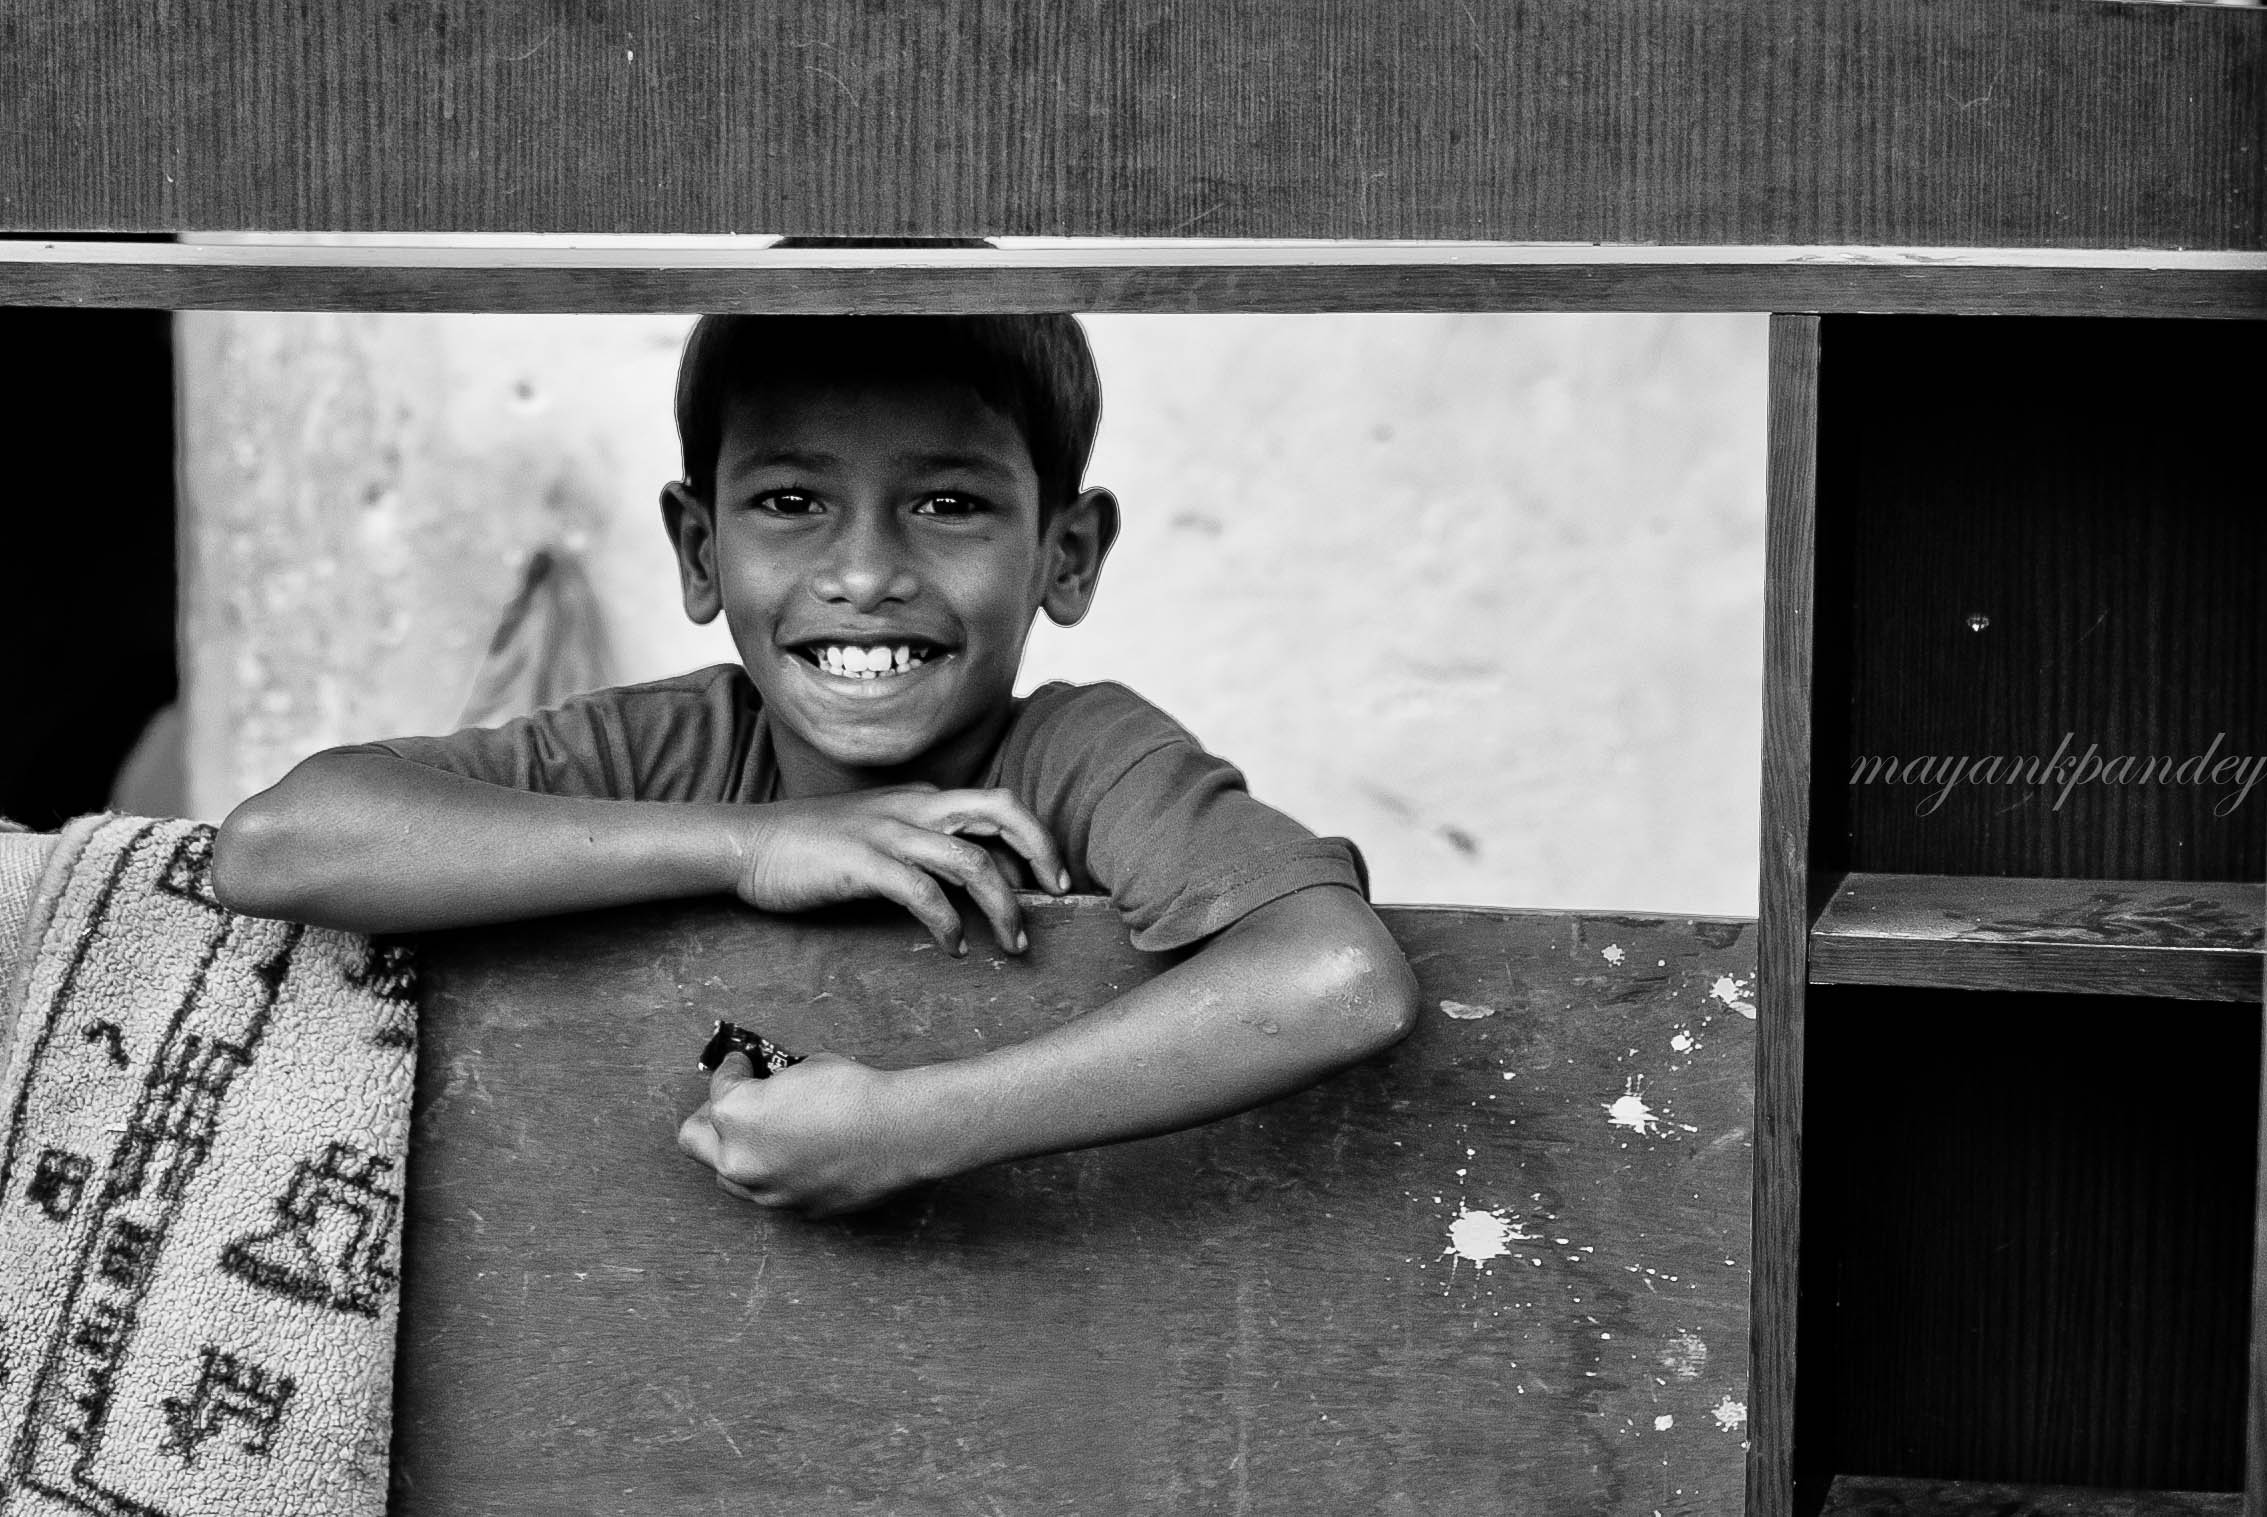 Smile - Mayank Pandey amateur photographer from Mumbai India online photo exhibition street [hotography black and white Маянк Пандей фотограф любитель из Мумбай Индия онлайн фотовыставка стрит фотография черно белый